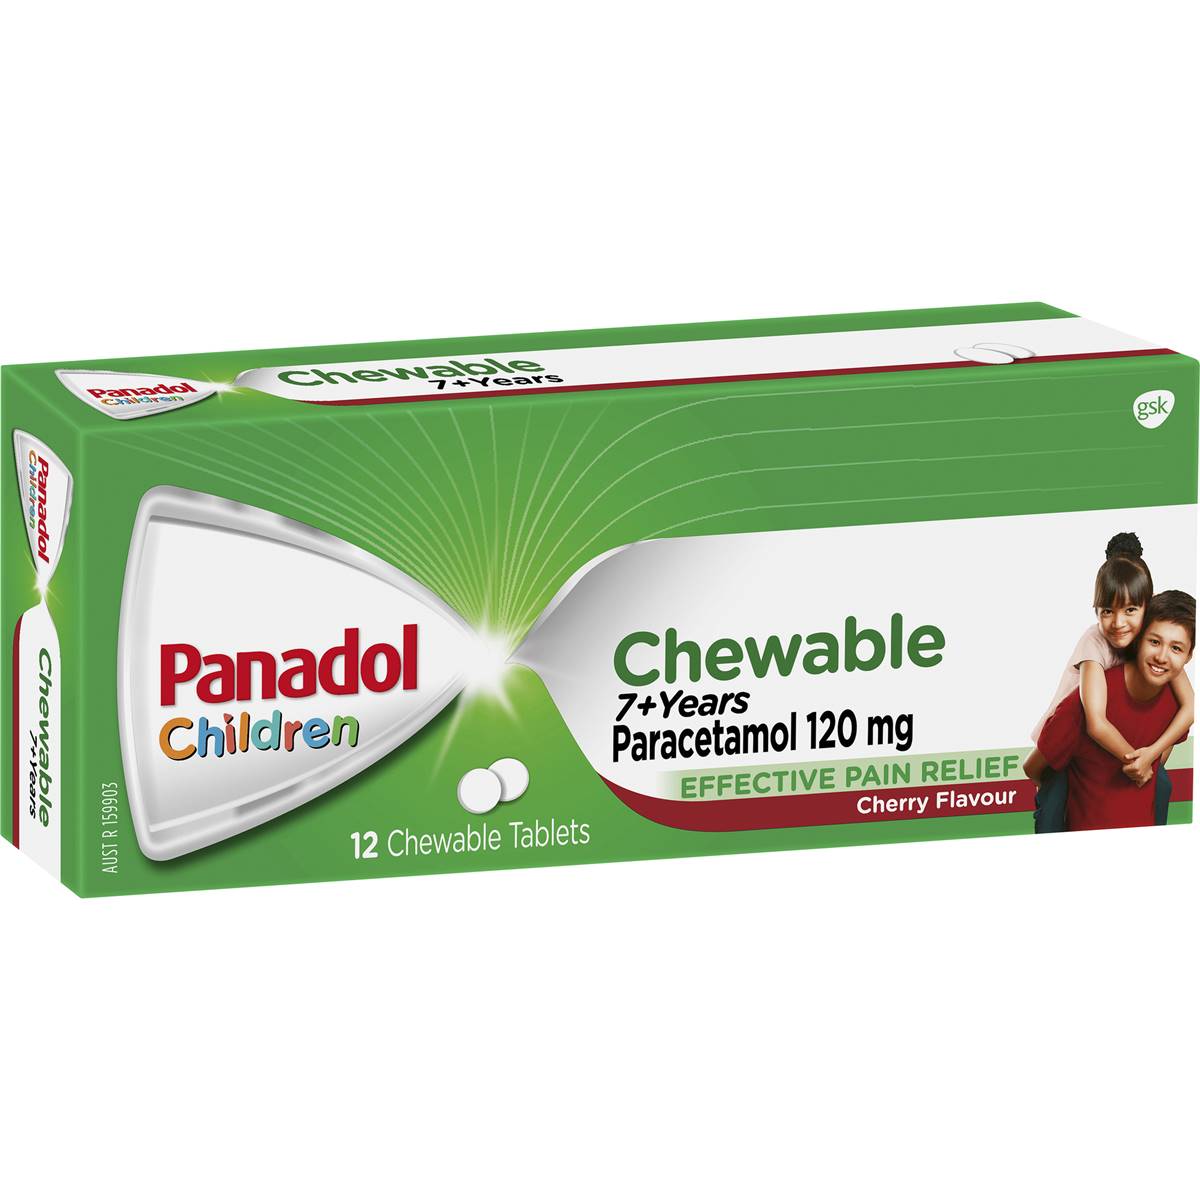 Panadol Childrens Chewable Tablets Cherry Flavour 12pk